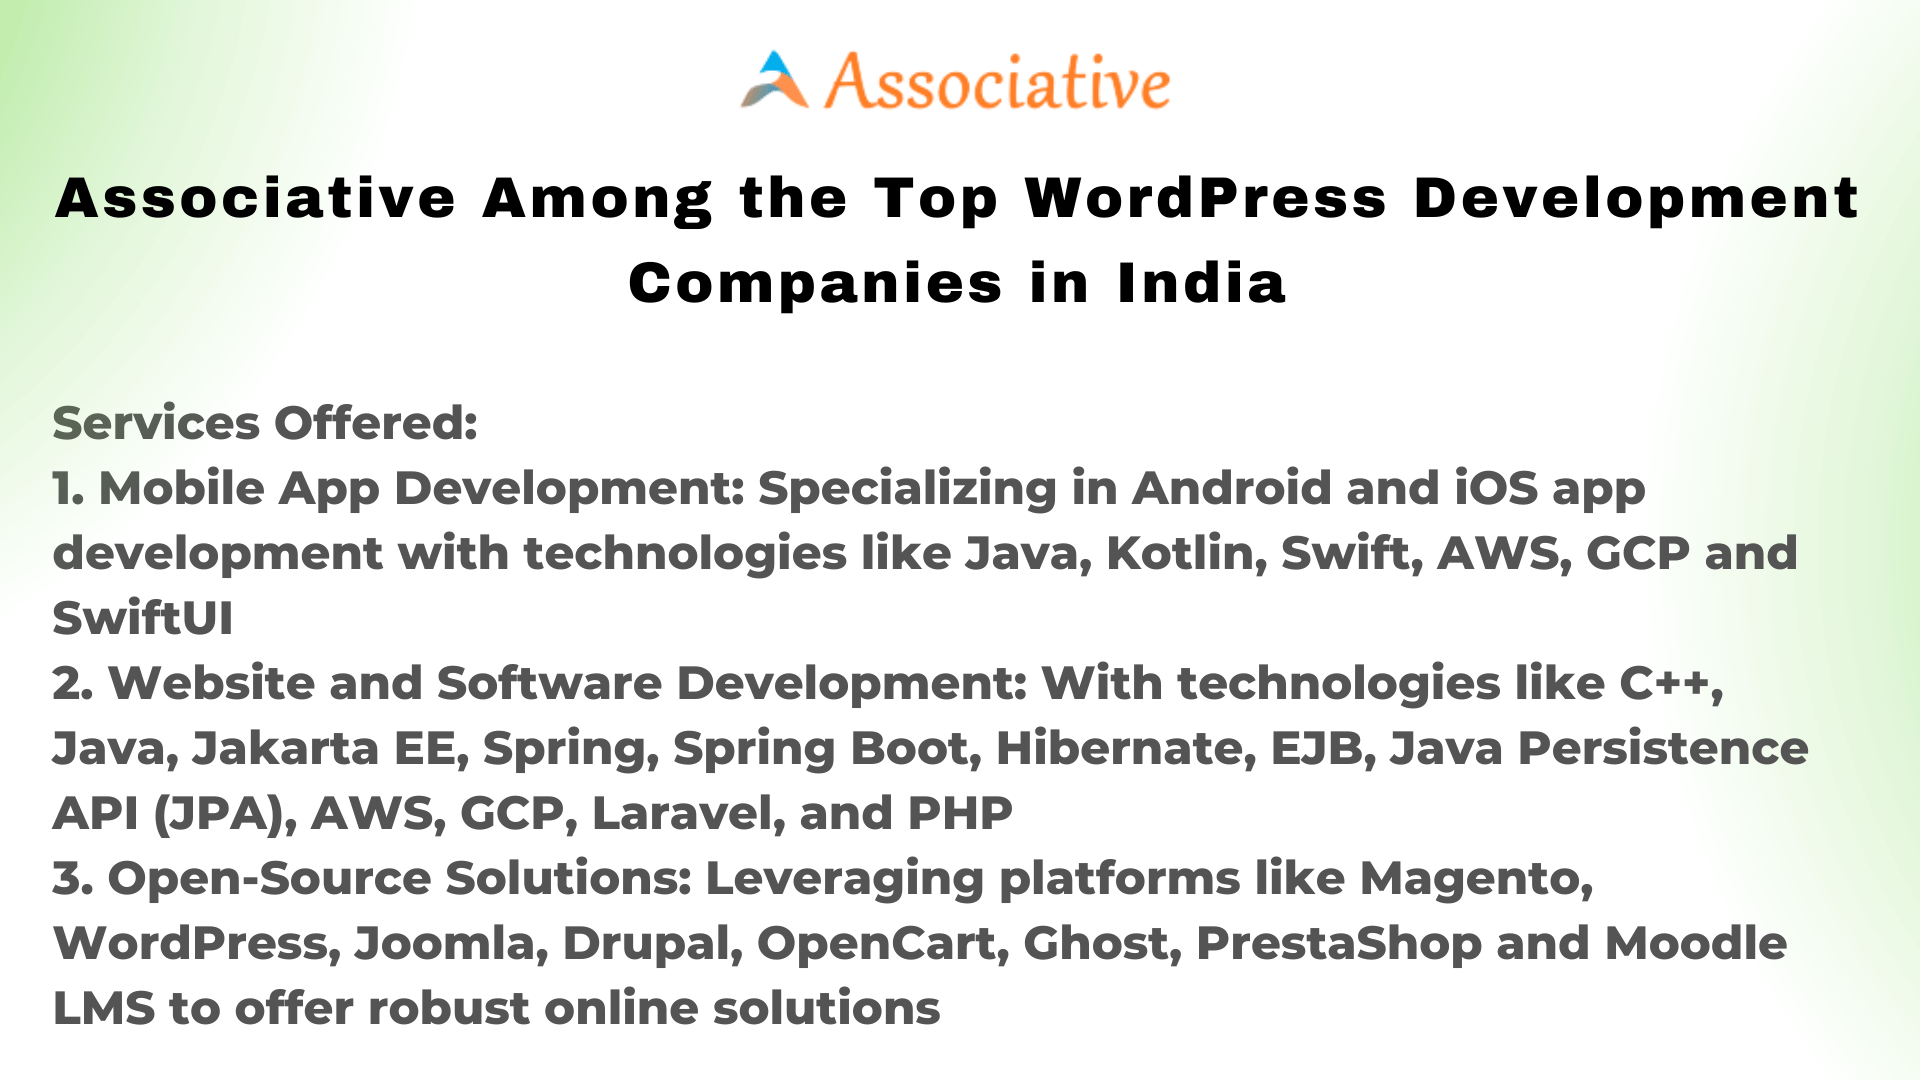 Associative Among the Top WordPress Development Companies in India